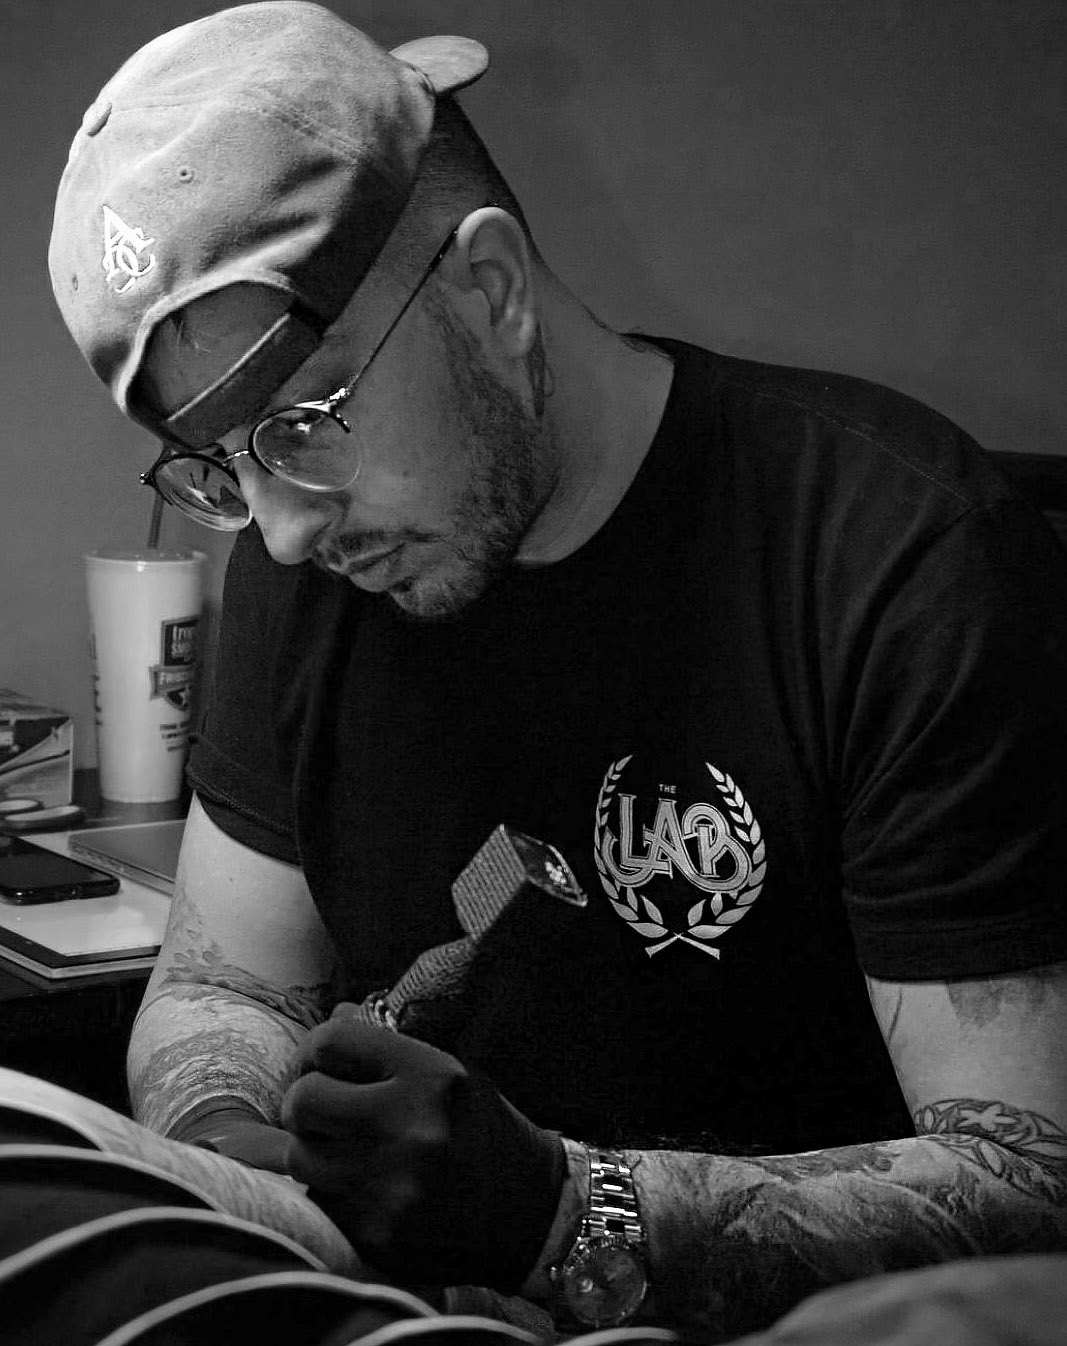 dan price, tattoo artist, tattooing a leg in his studio